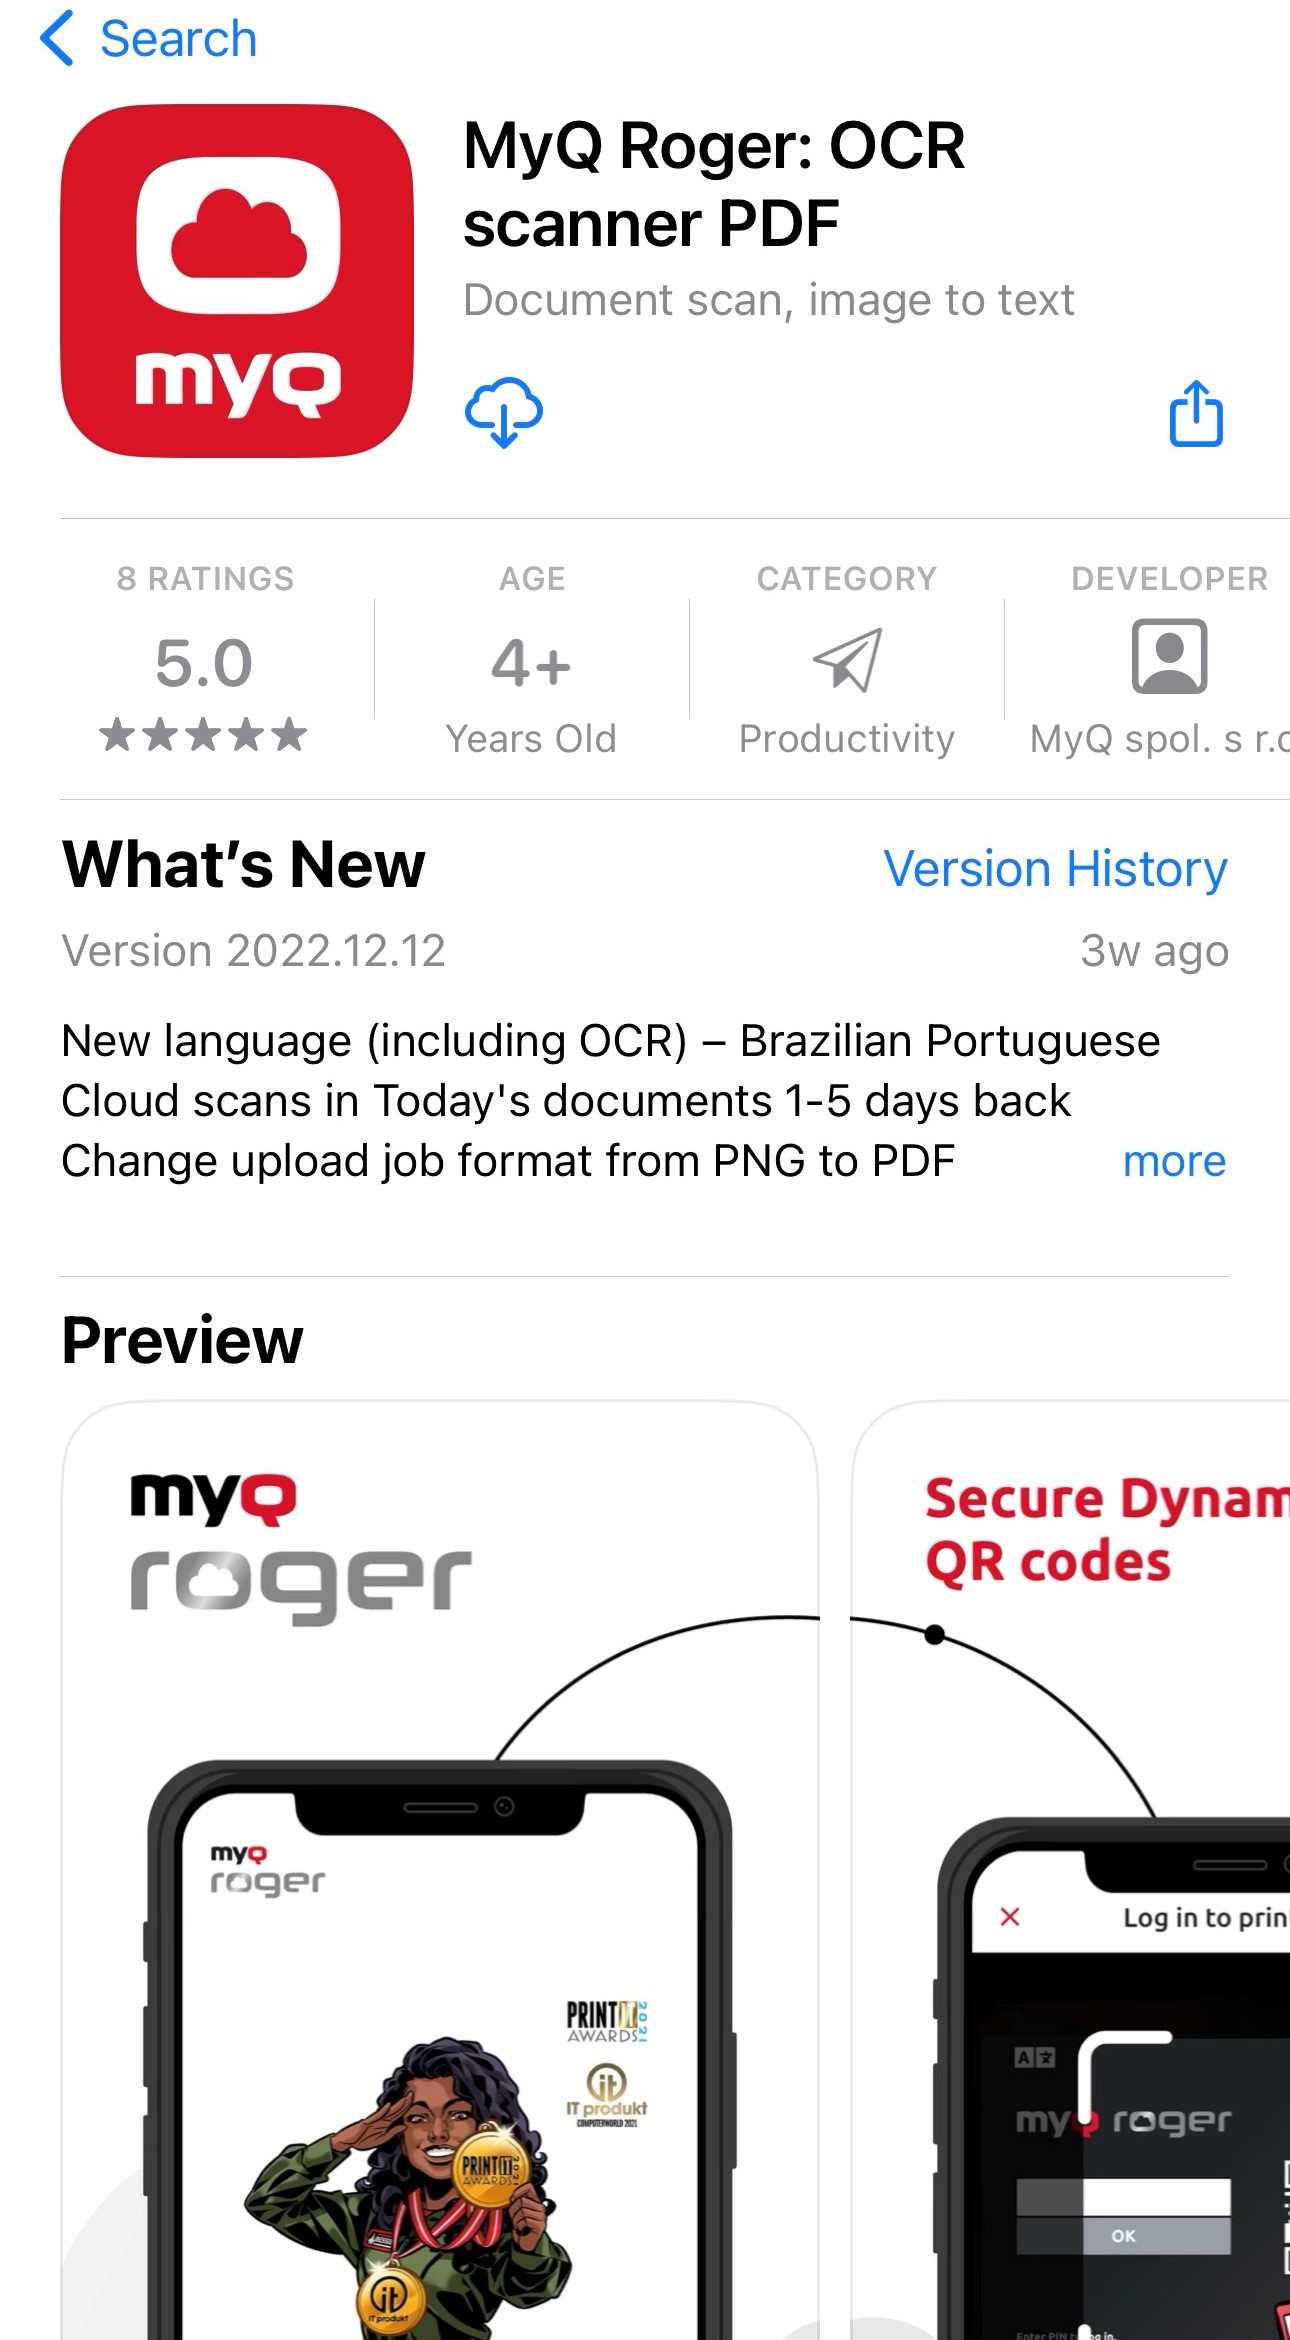 Installing MyQ Roger on iOS